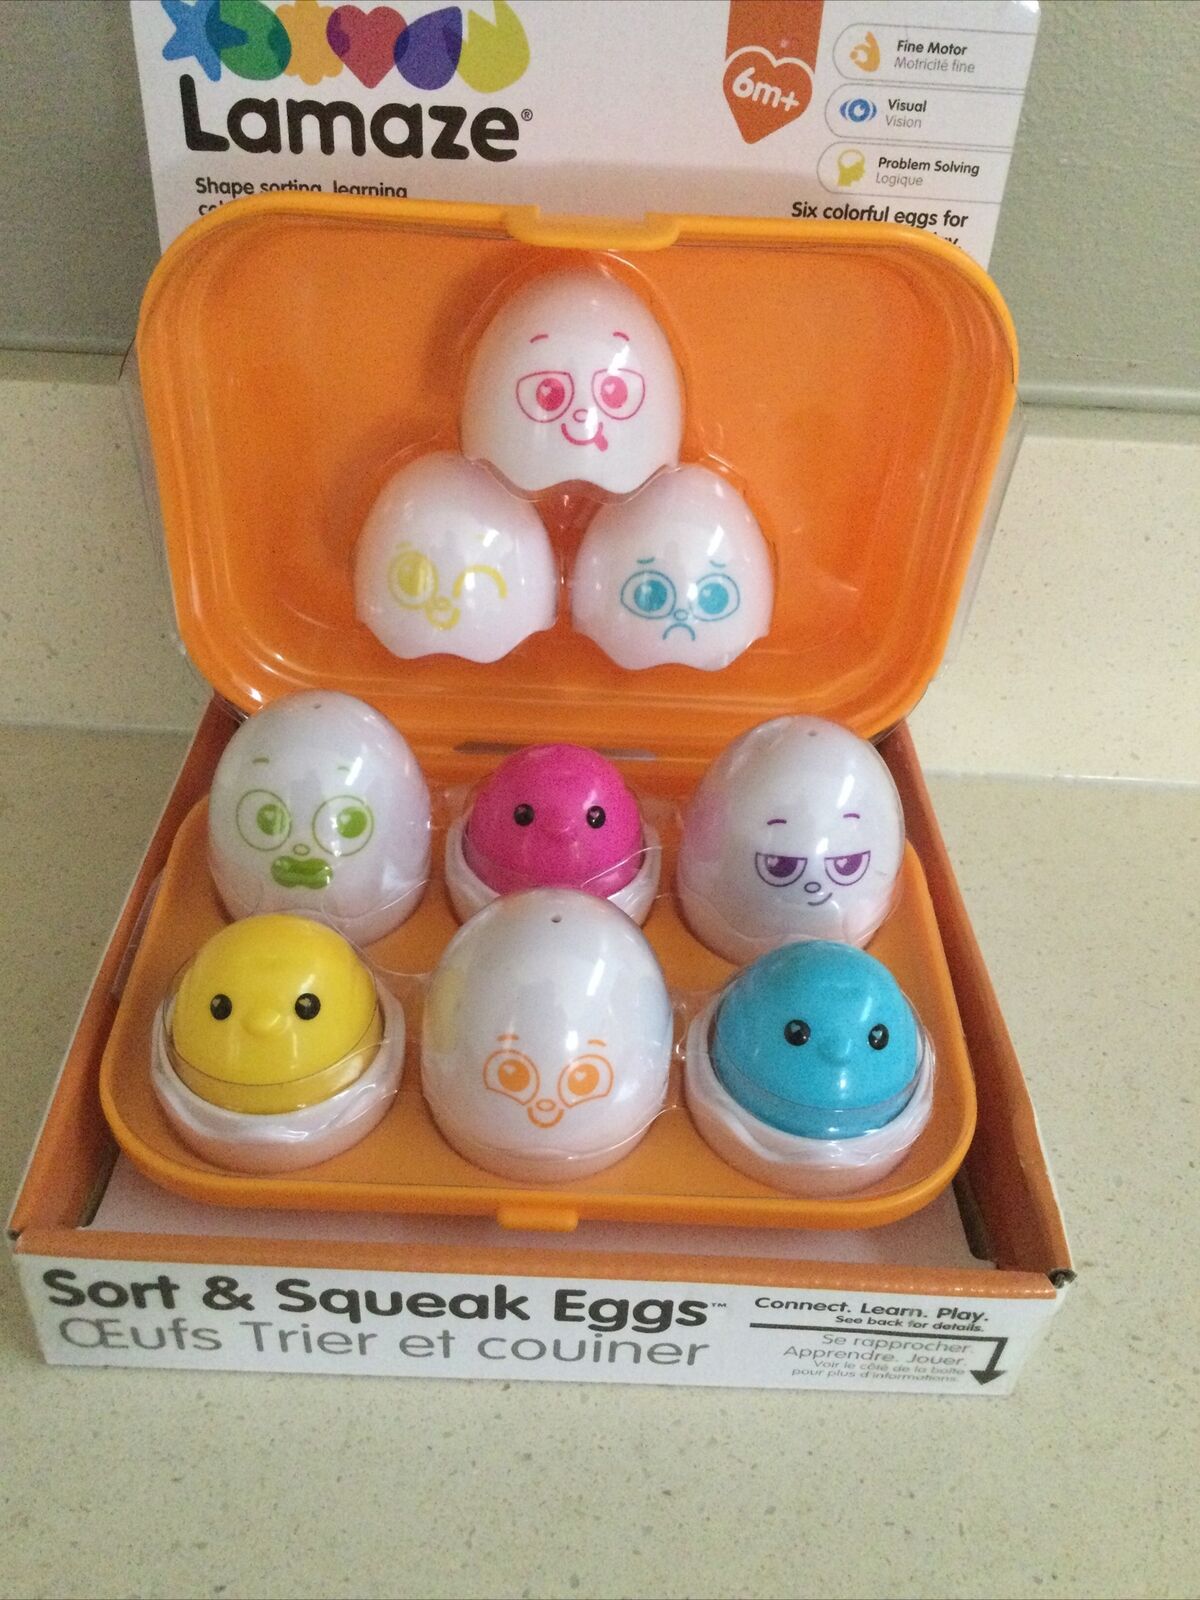 Lamaze - Sort & Squeak Eggs Toy, New